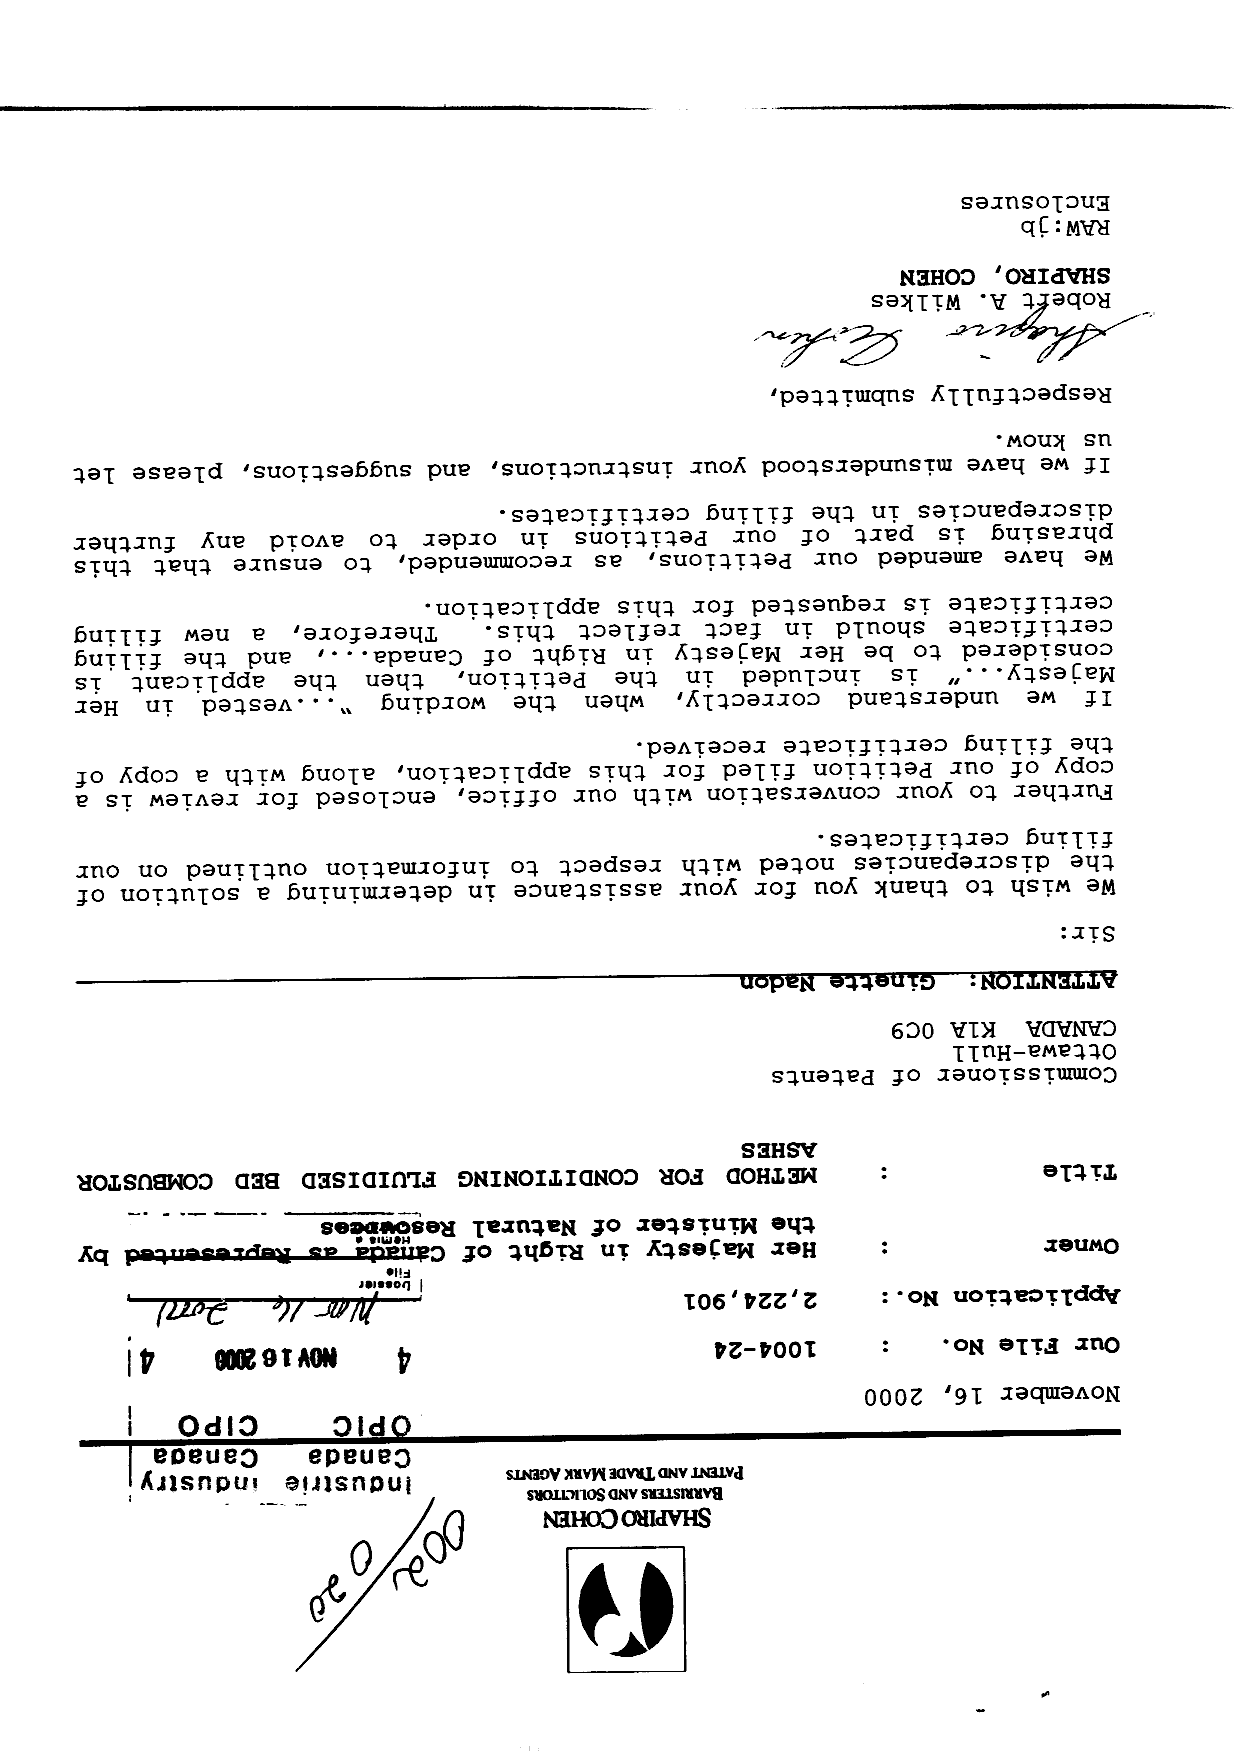 Canadian Patent Document 2224901. Correspondence 19991216. Image 1 of 4